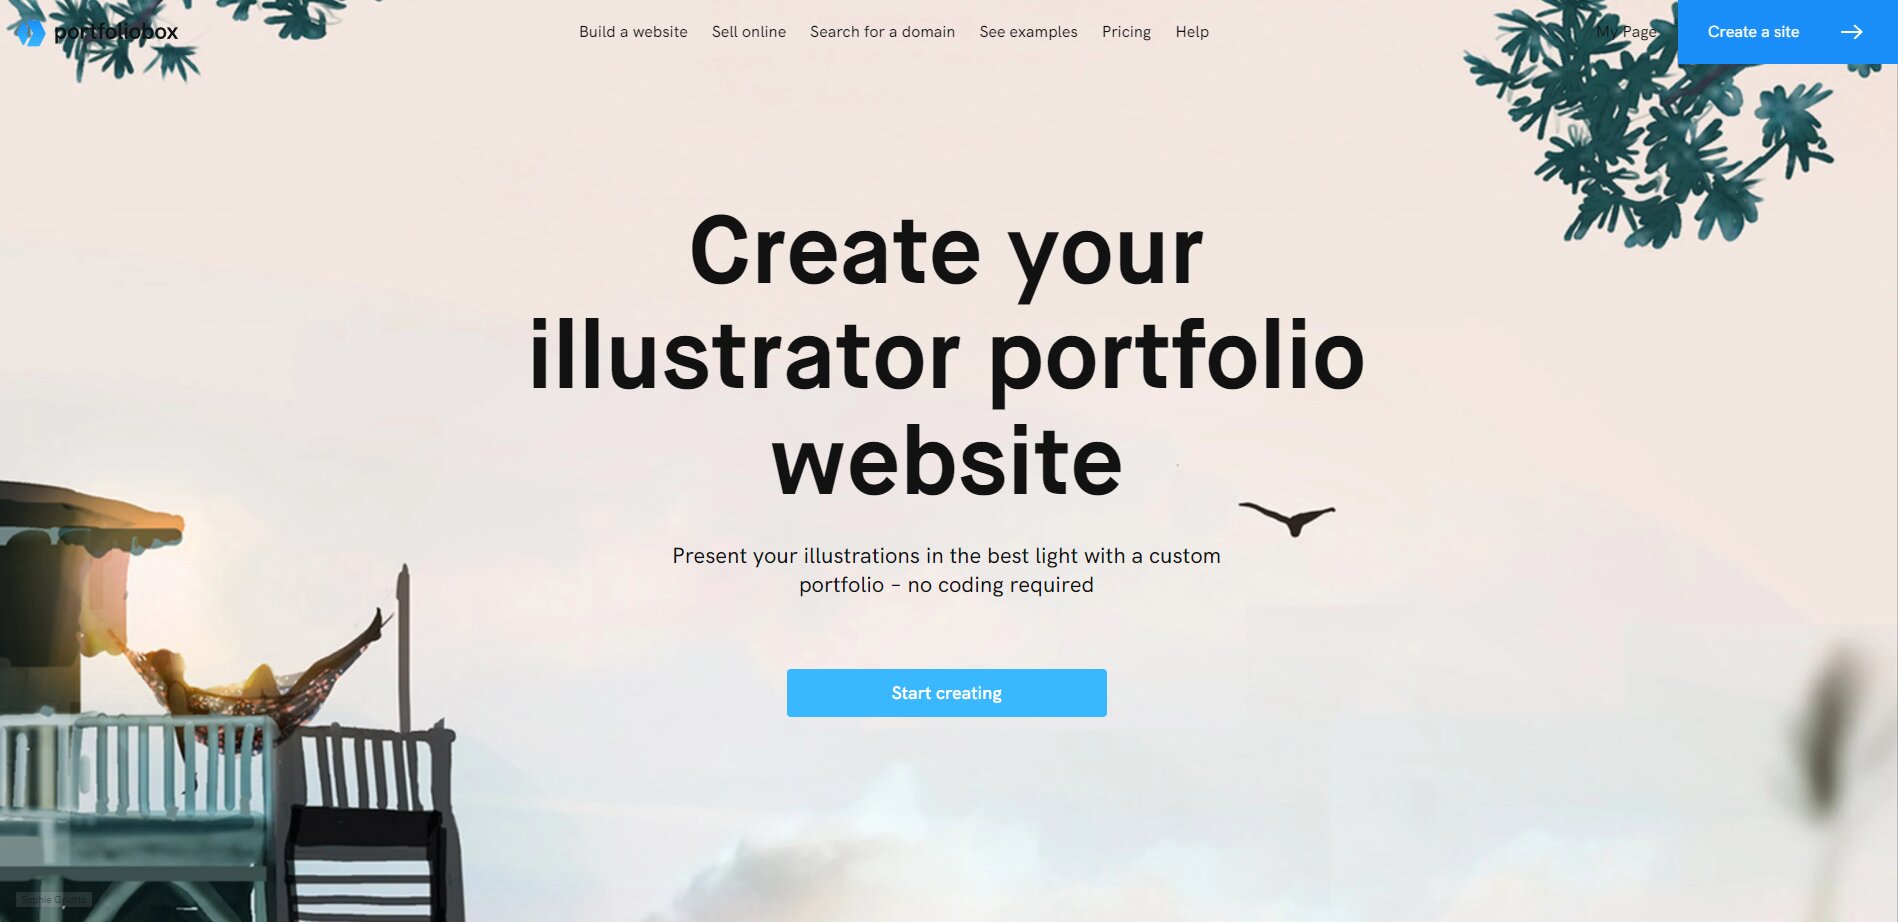 How to Build an Illustrator Portfolio Website with Portfoliobox